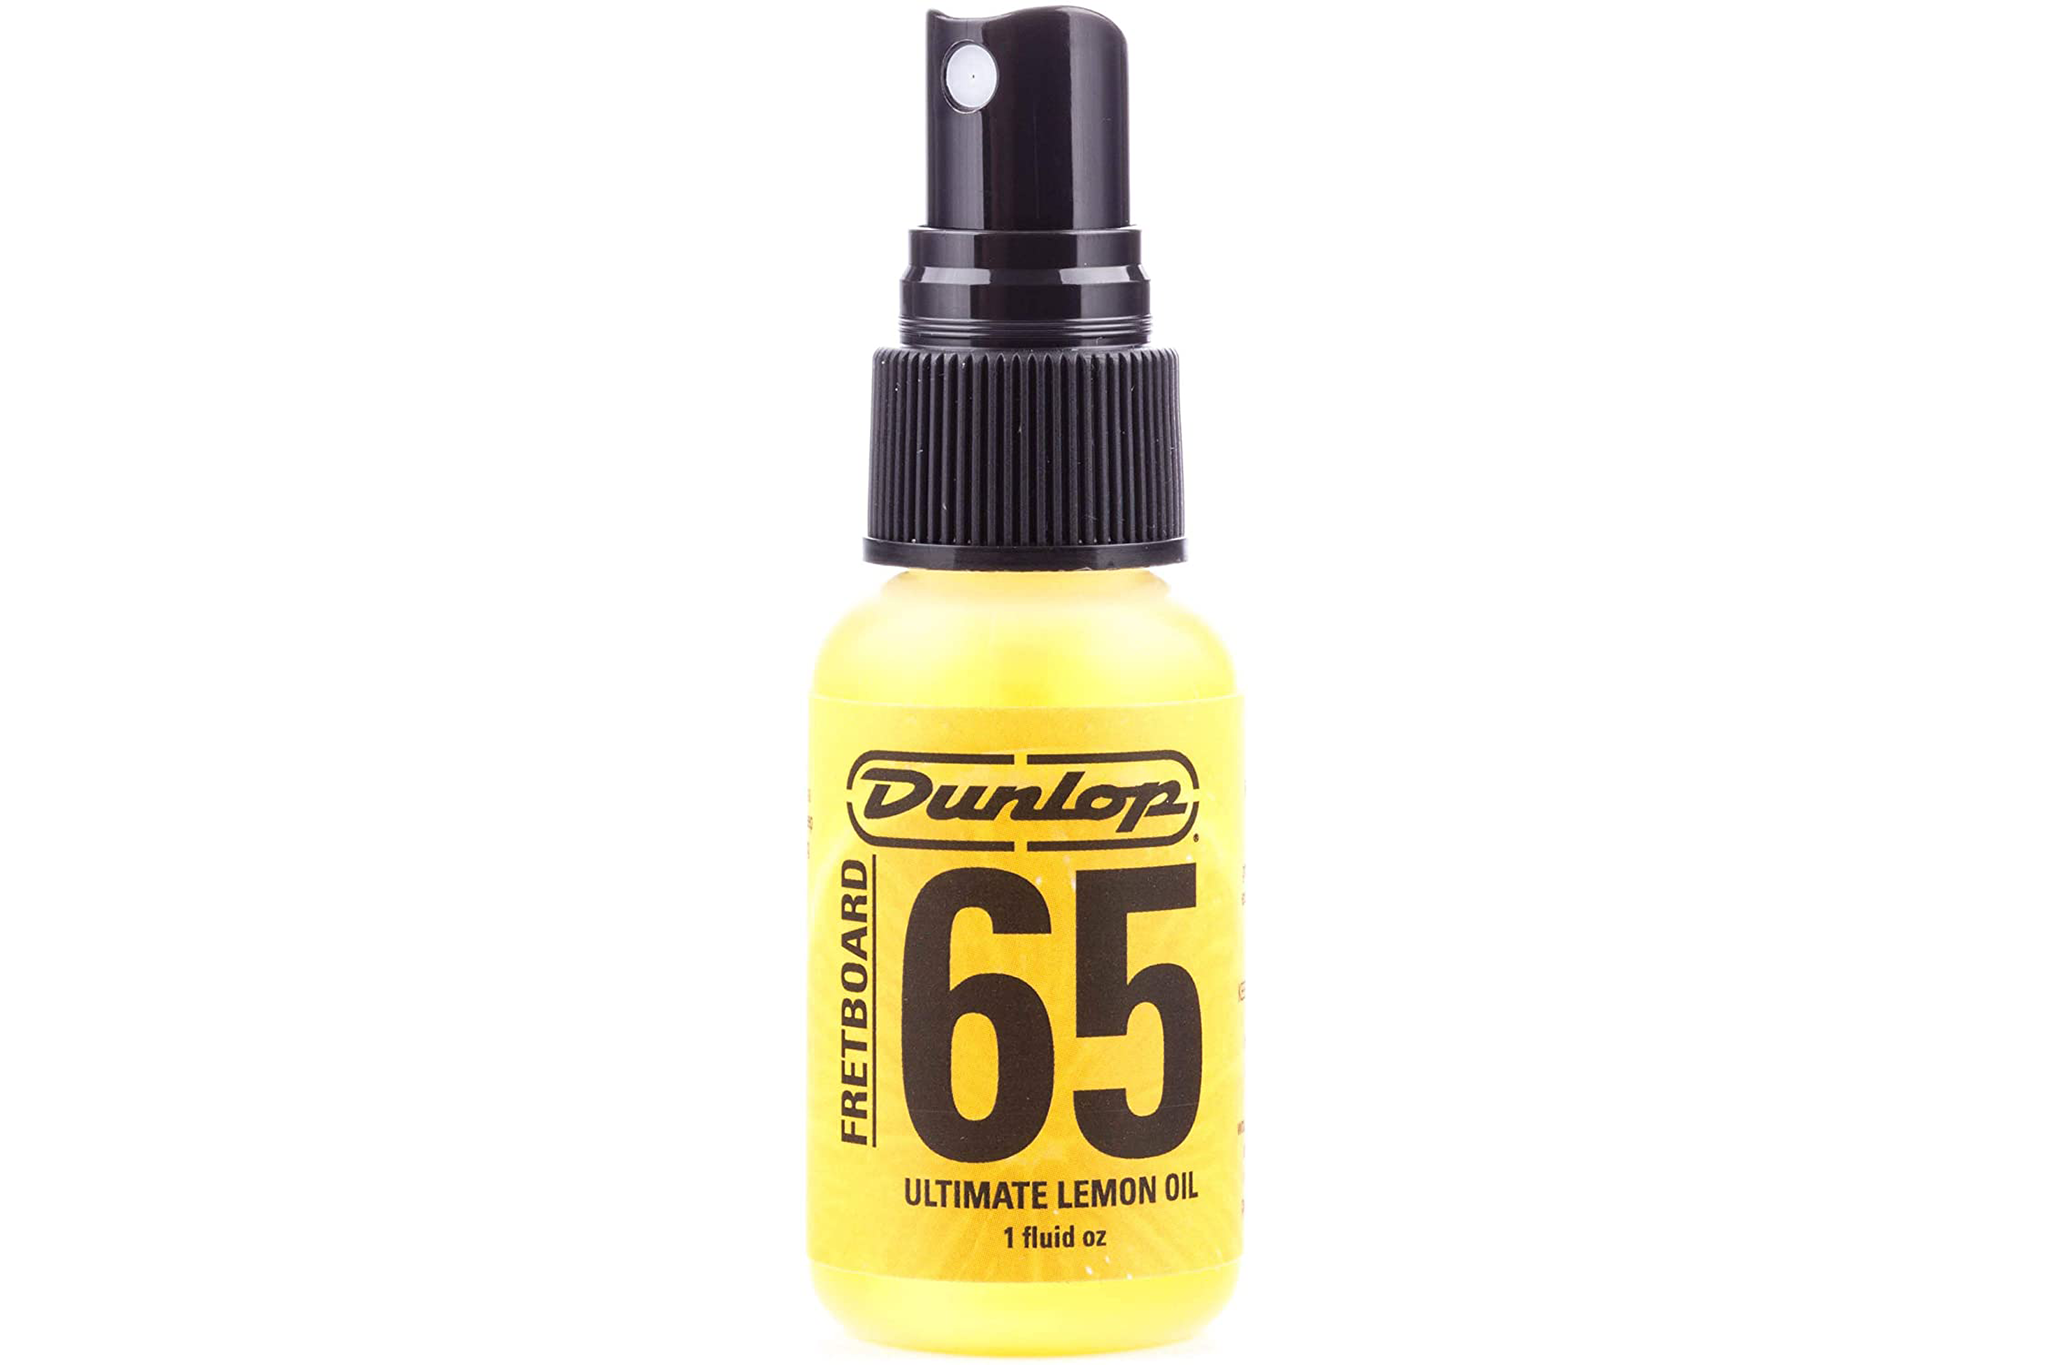 Dunlop Formula 65 Ultimate Lemon Oil-1Oz (6551SI)